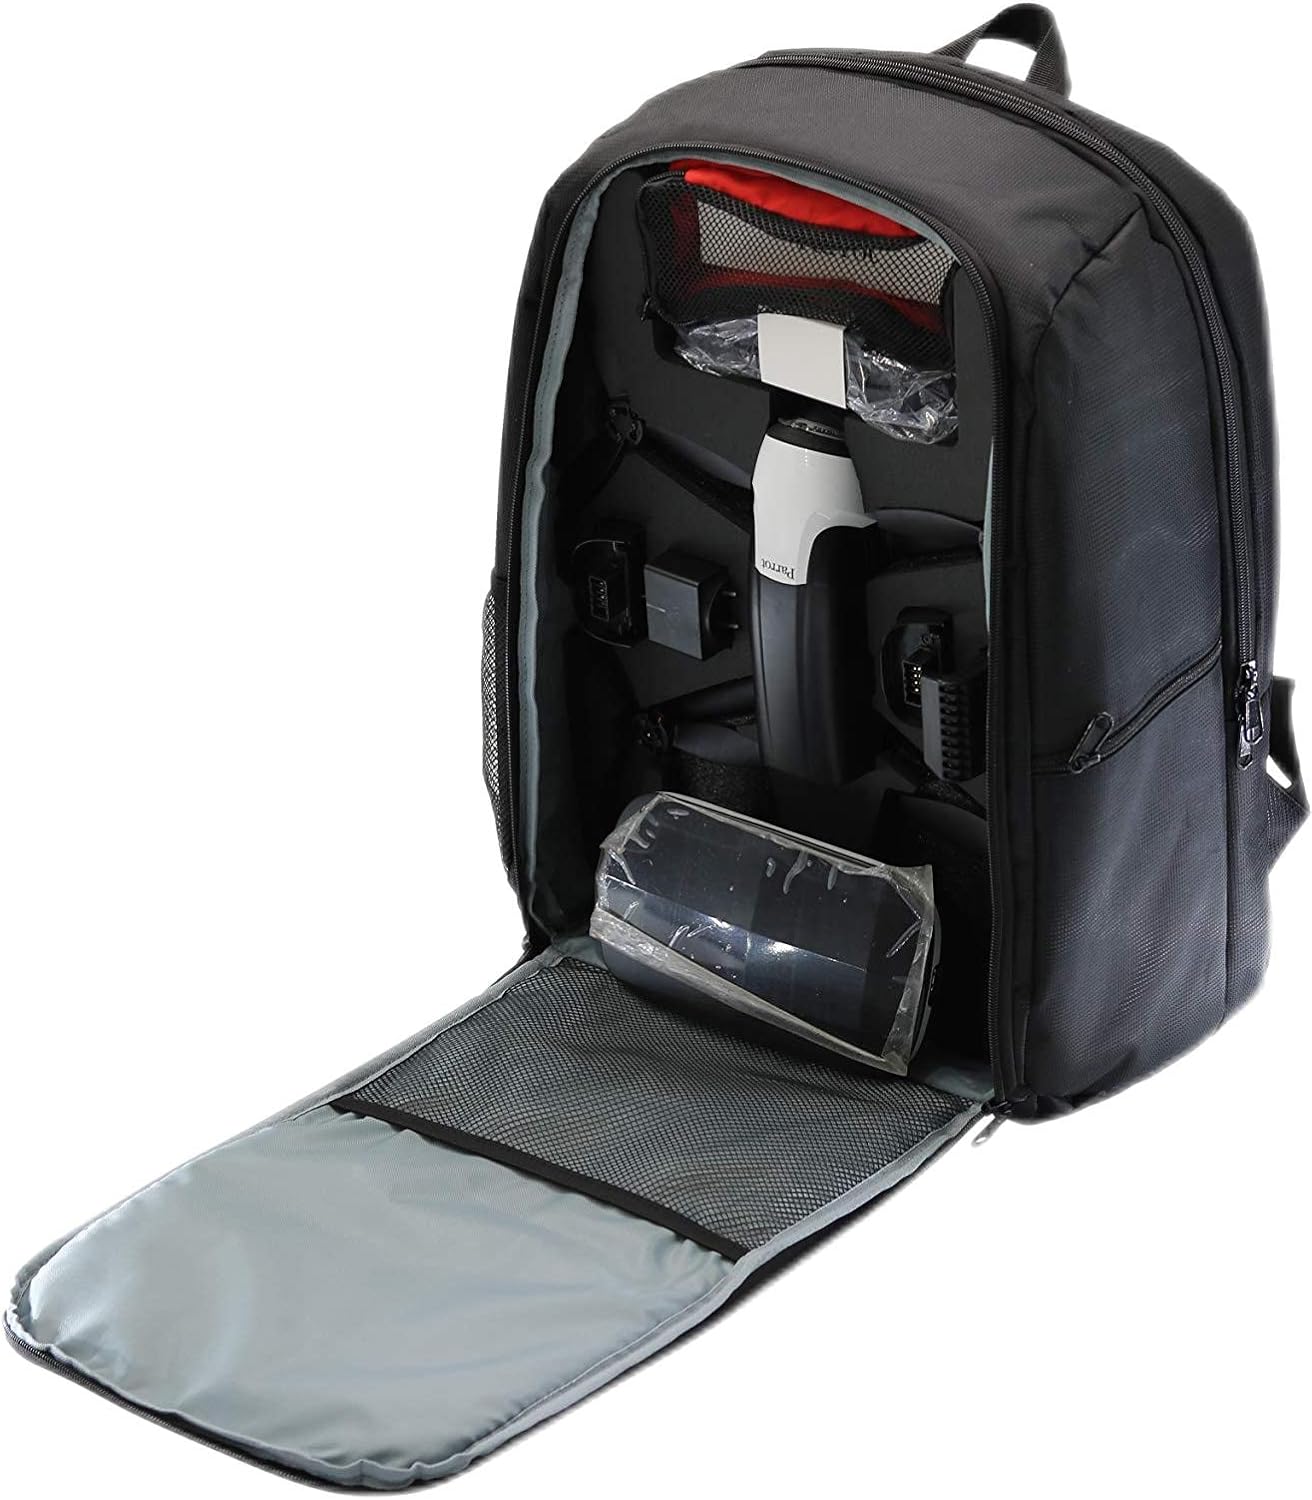 MIFXIN Drone Backpack Portable Shoulder Bag Carrying Case Backpack for Parrot Bebop 2 Power FPV Drone Quadcopter